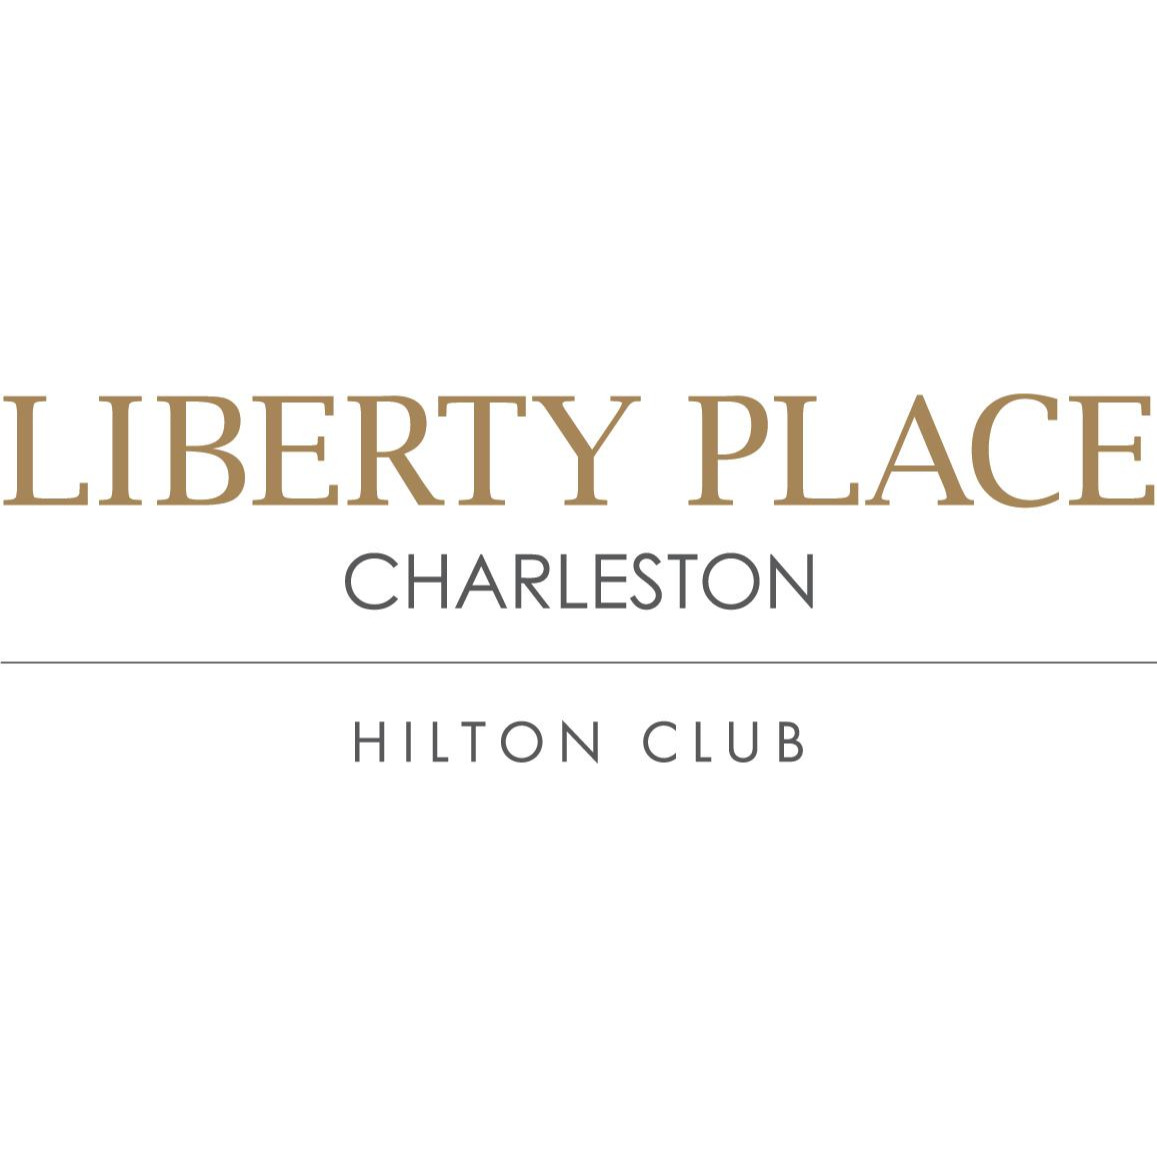 Hilton Club Liberty Place Charleston